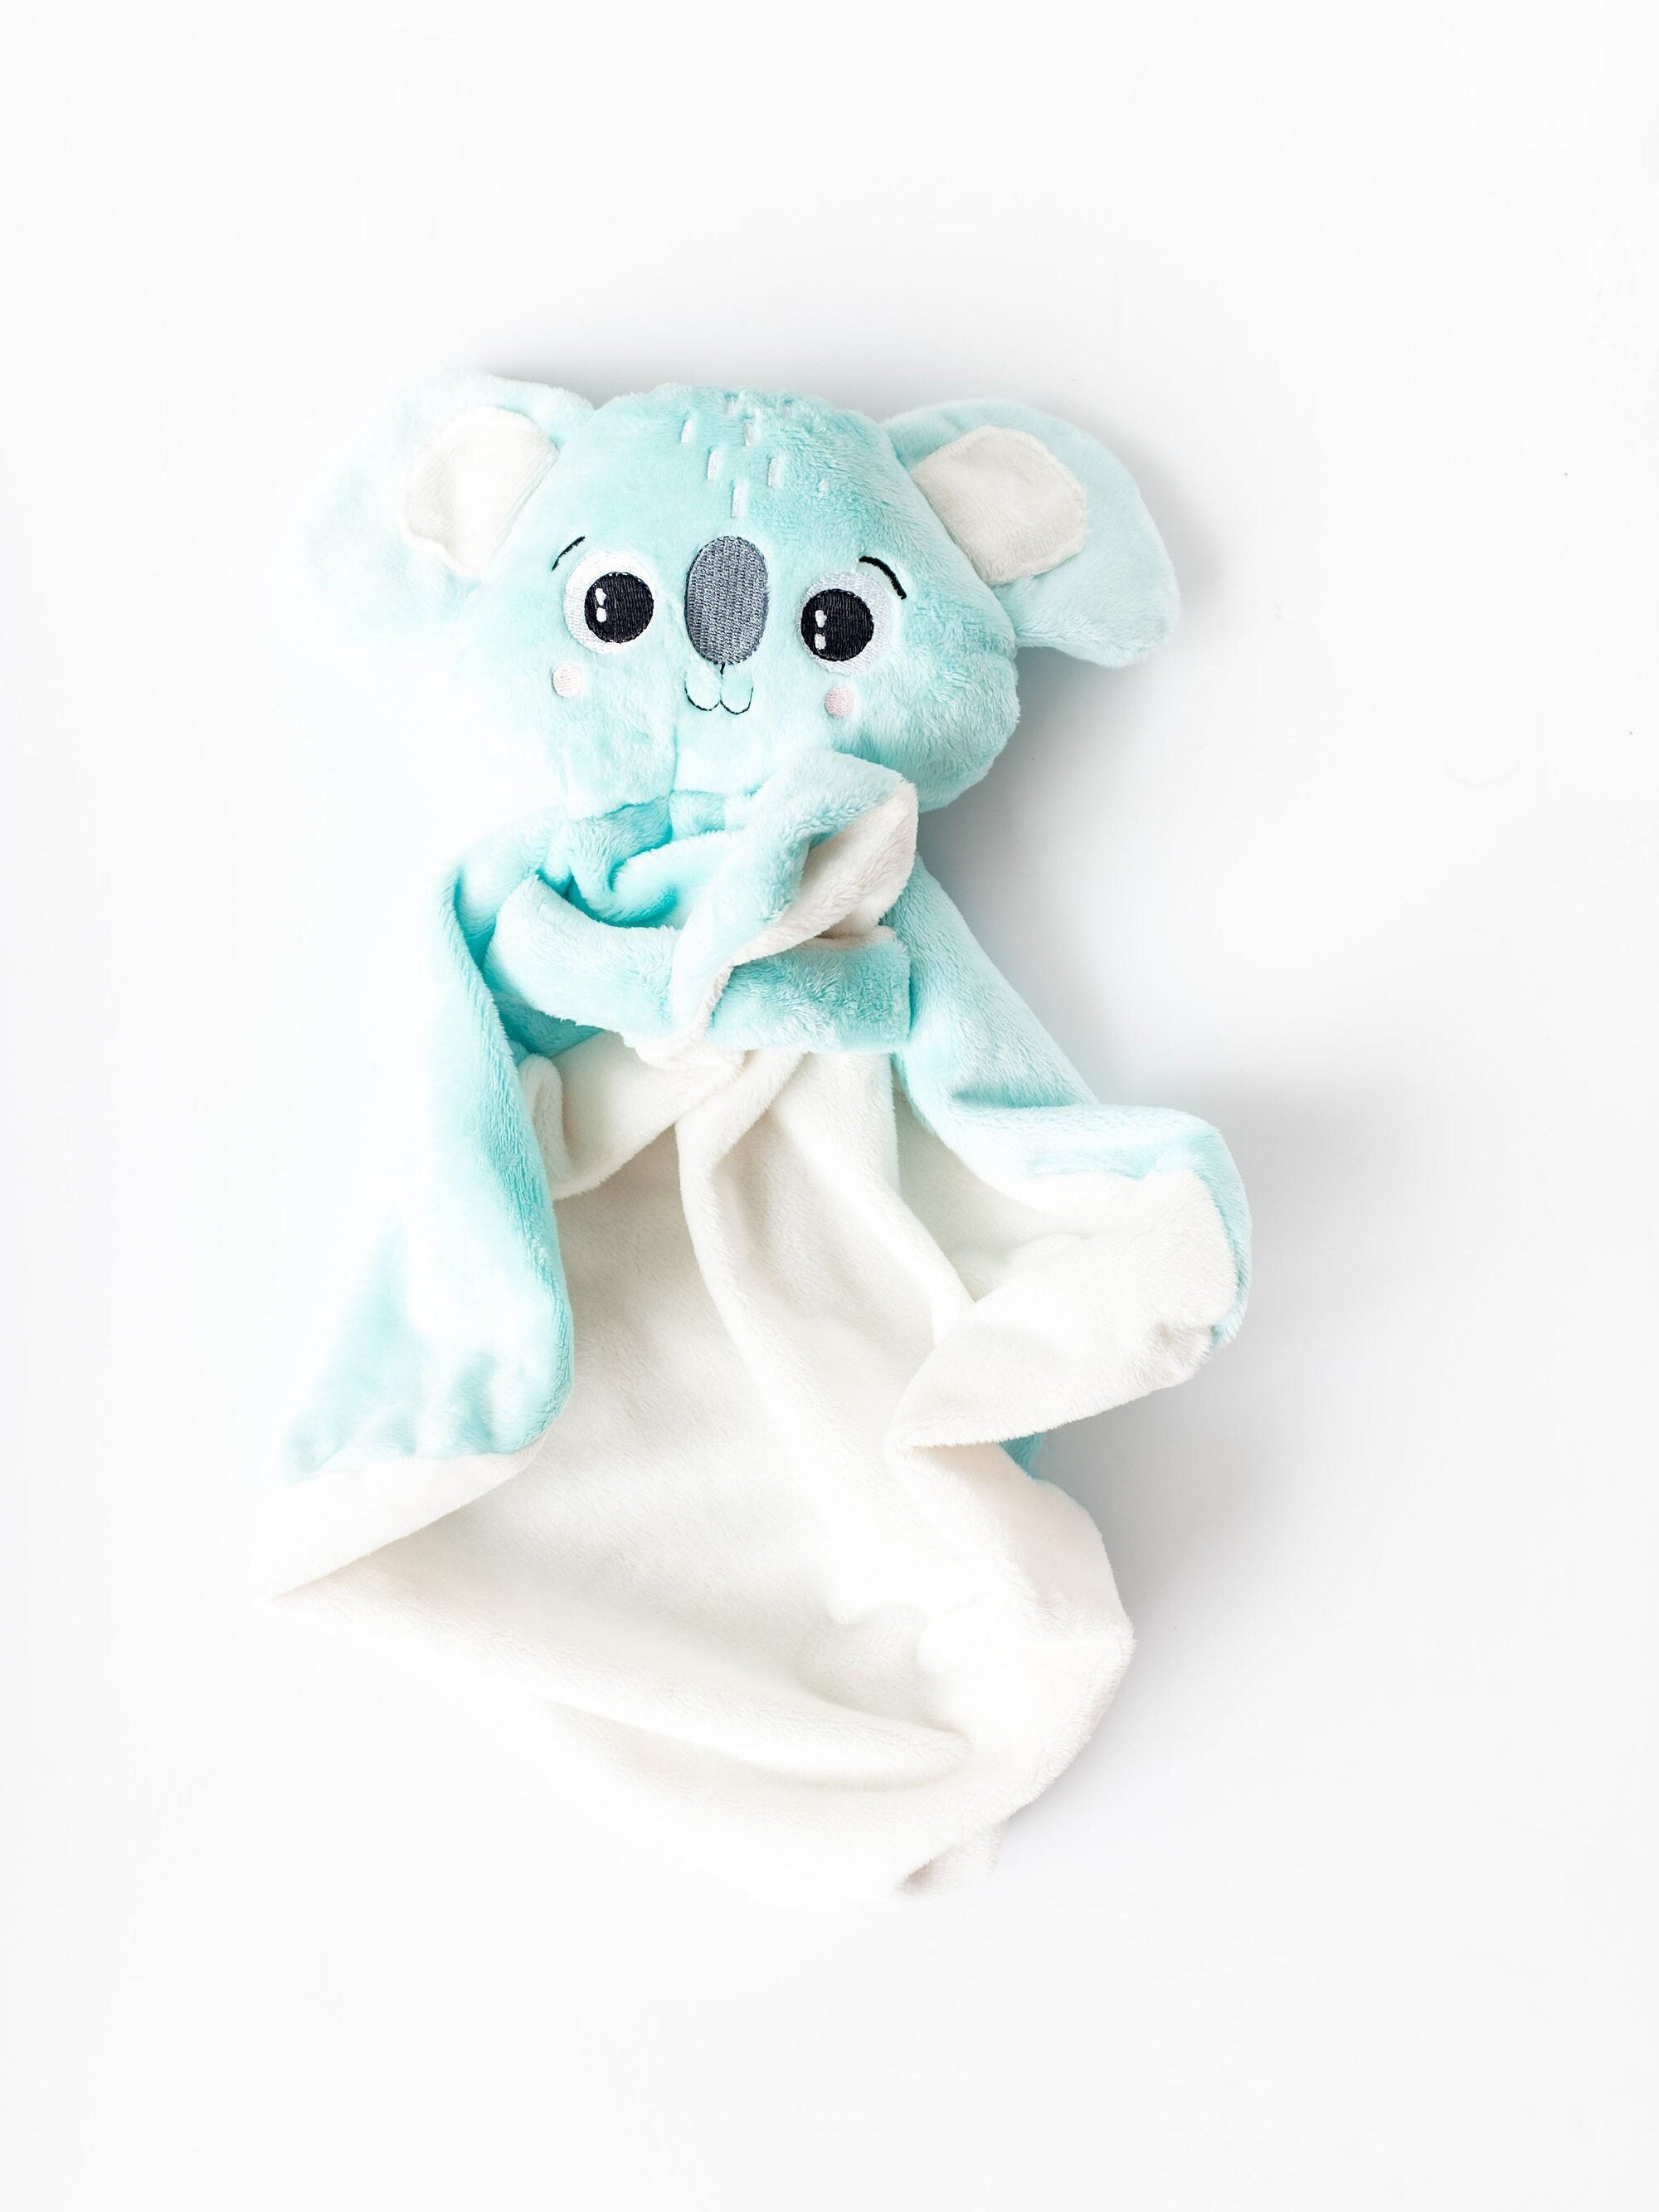 Plush Toys Cute cuddly Koala Bear Stuffed Animal Doll Kids Baby Birthday Gifts J 